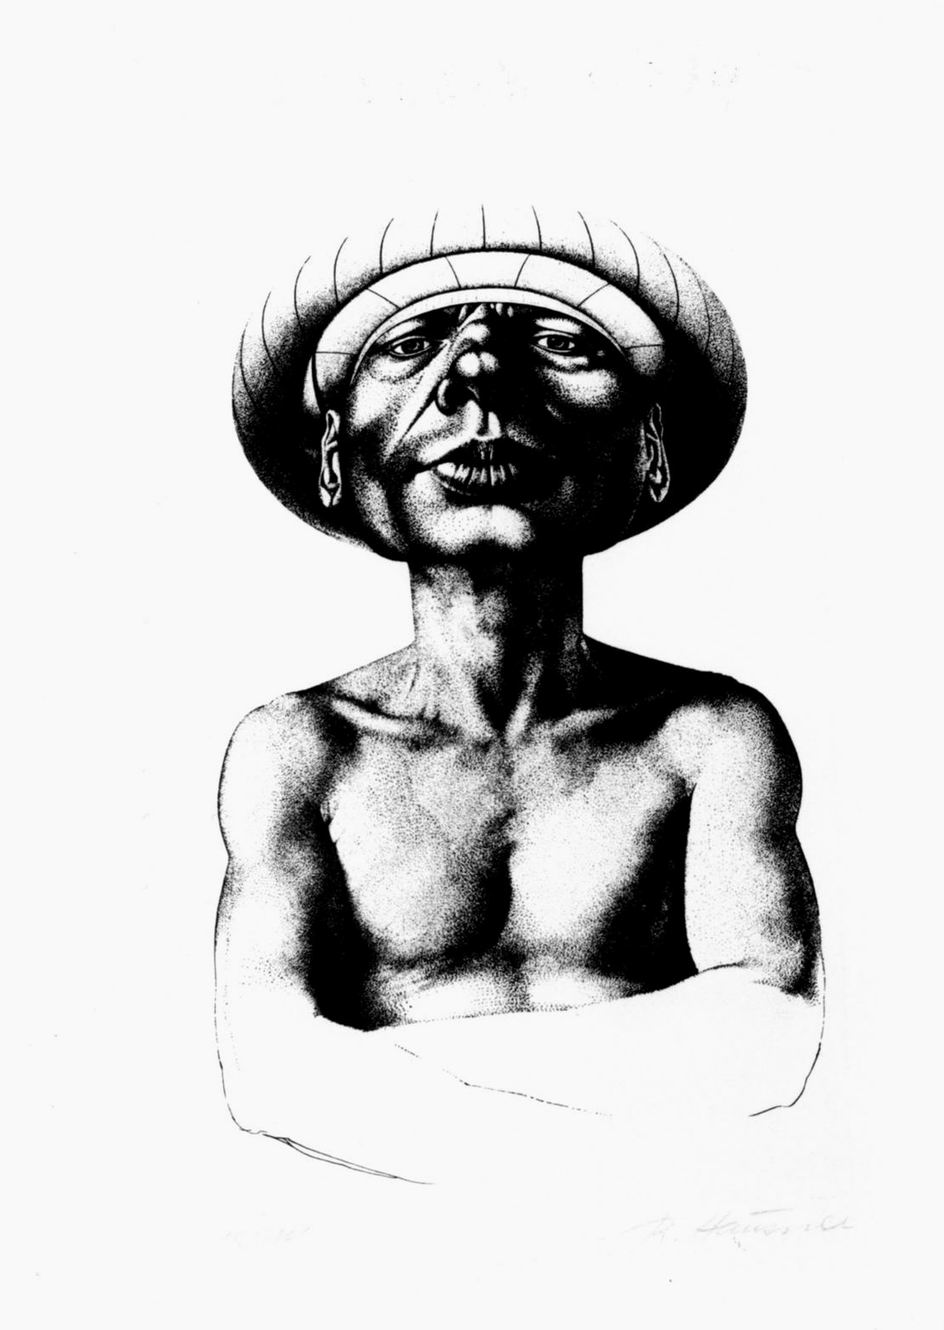 Adam mit verschränten armen, Uomo a mezzo busto con turbante e braccia incrociate (stampa) di Hausner Rudolf (sec. XX)